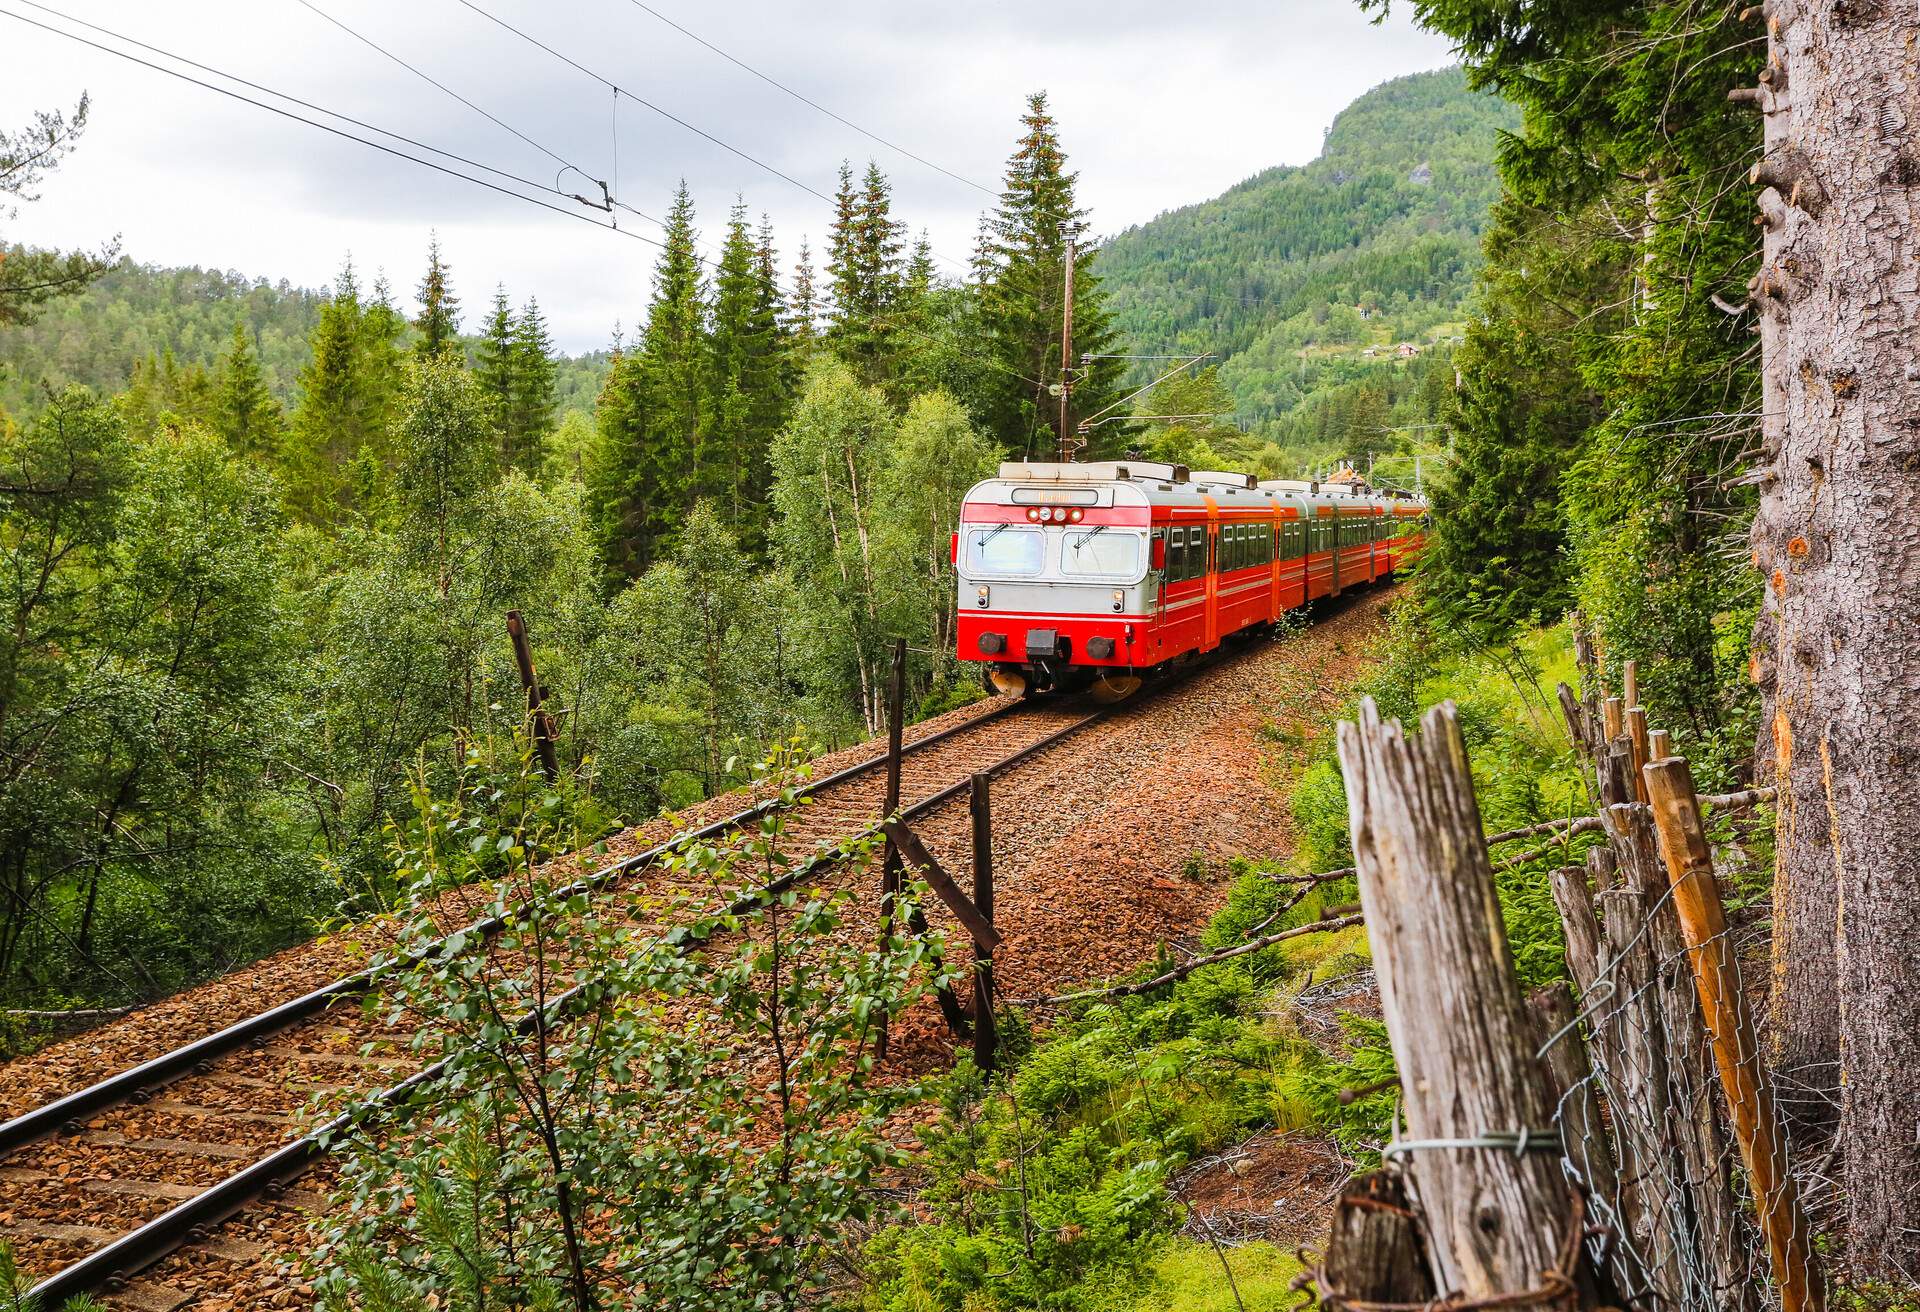 Oslo - Bergen train going thorough mountains. Norway.